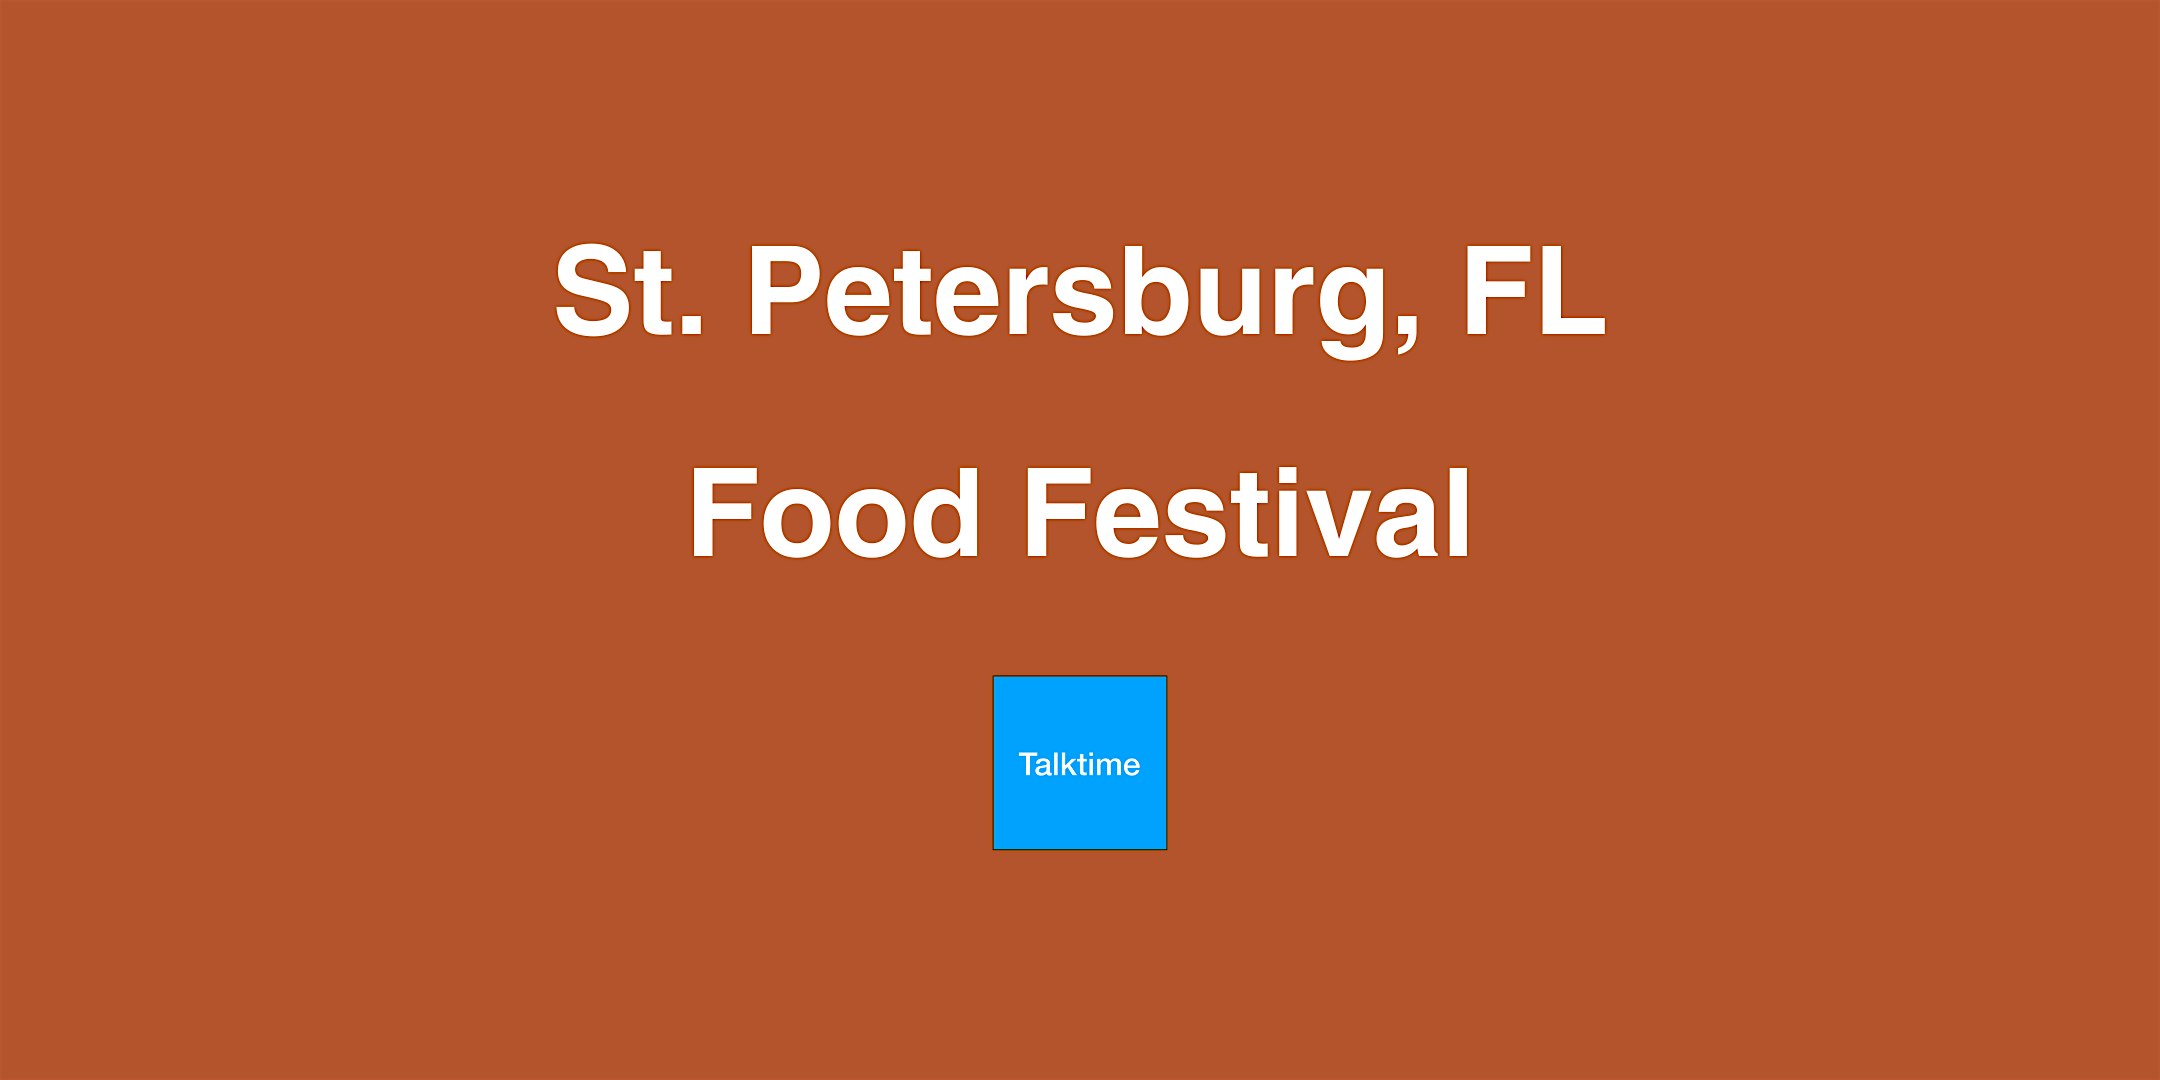 Food Festival - St. Petersburg